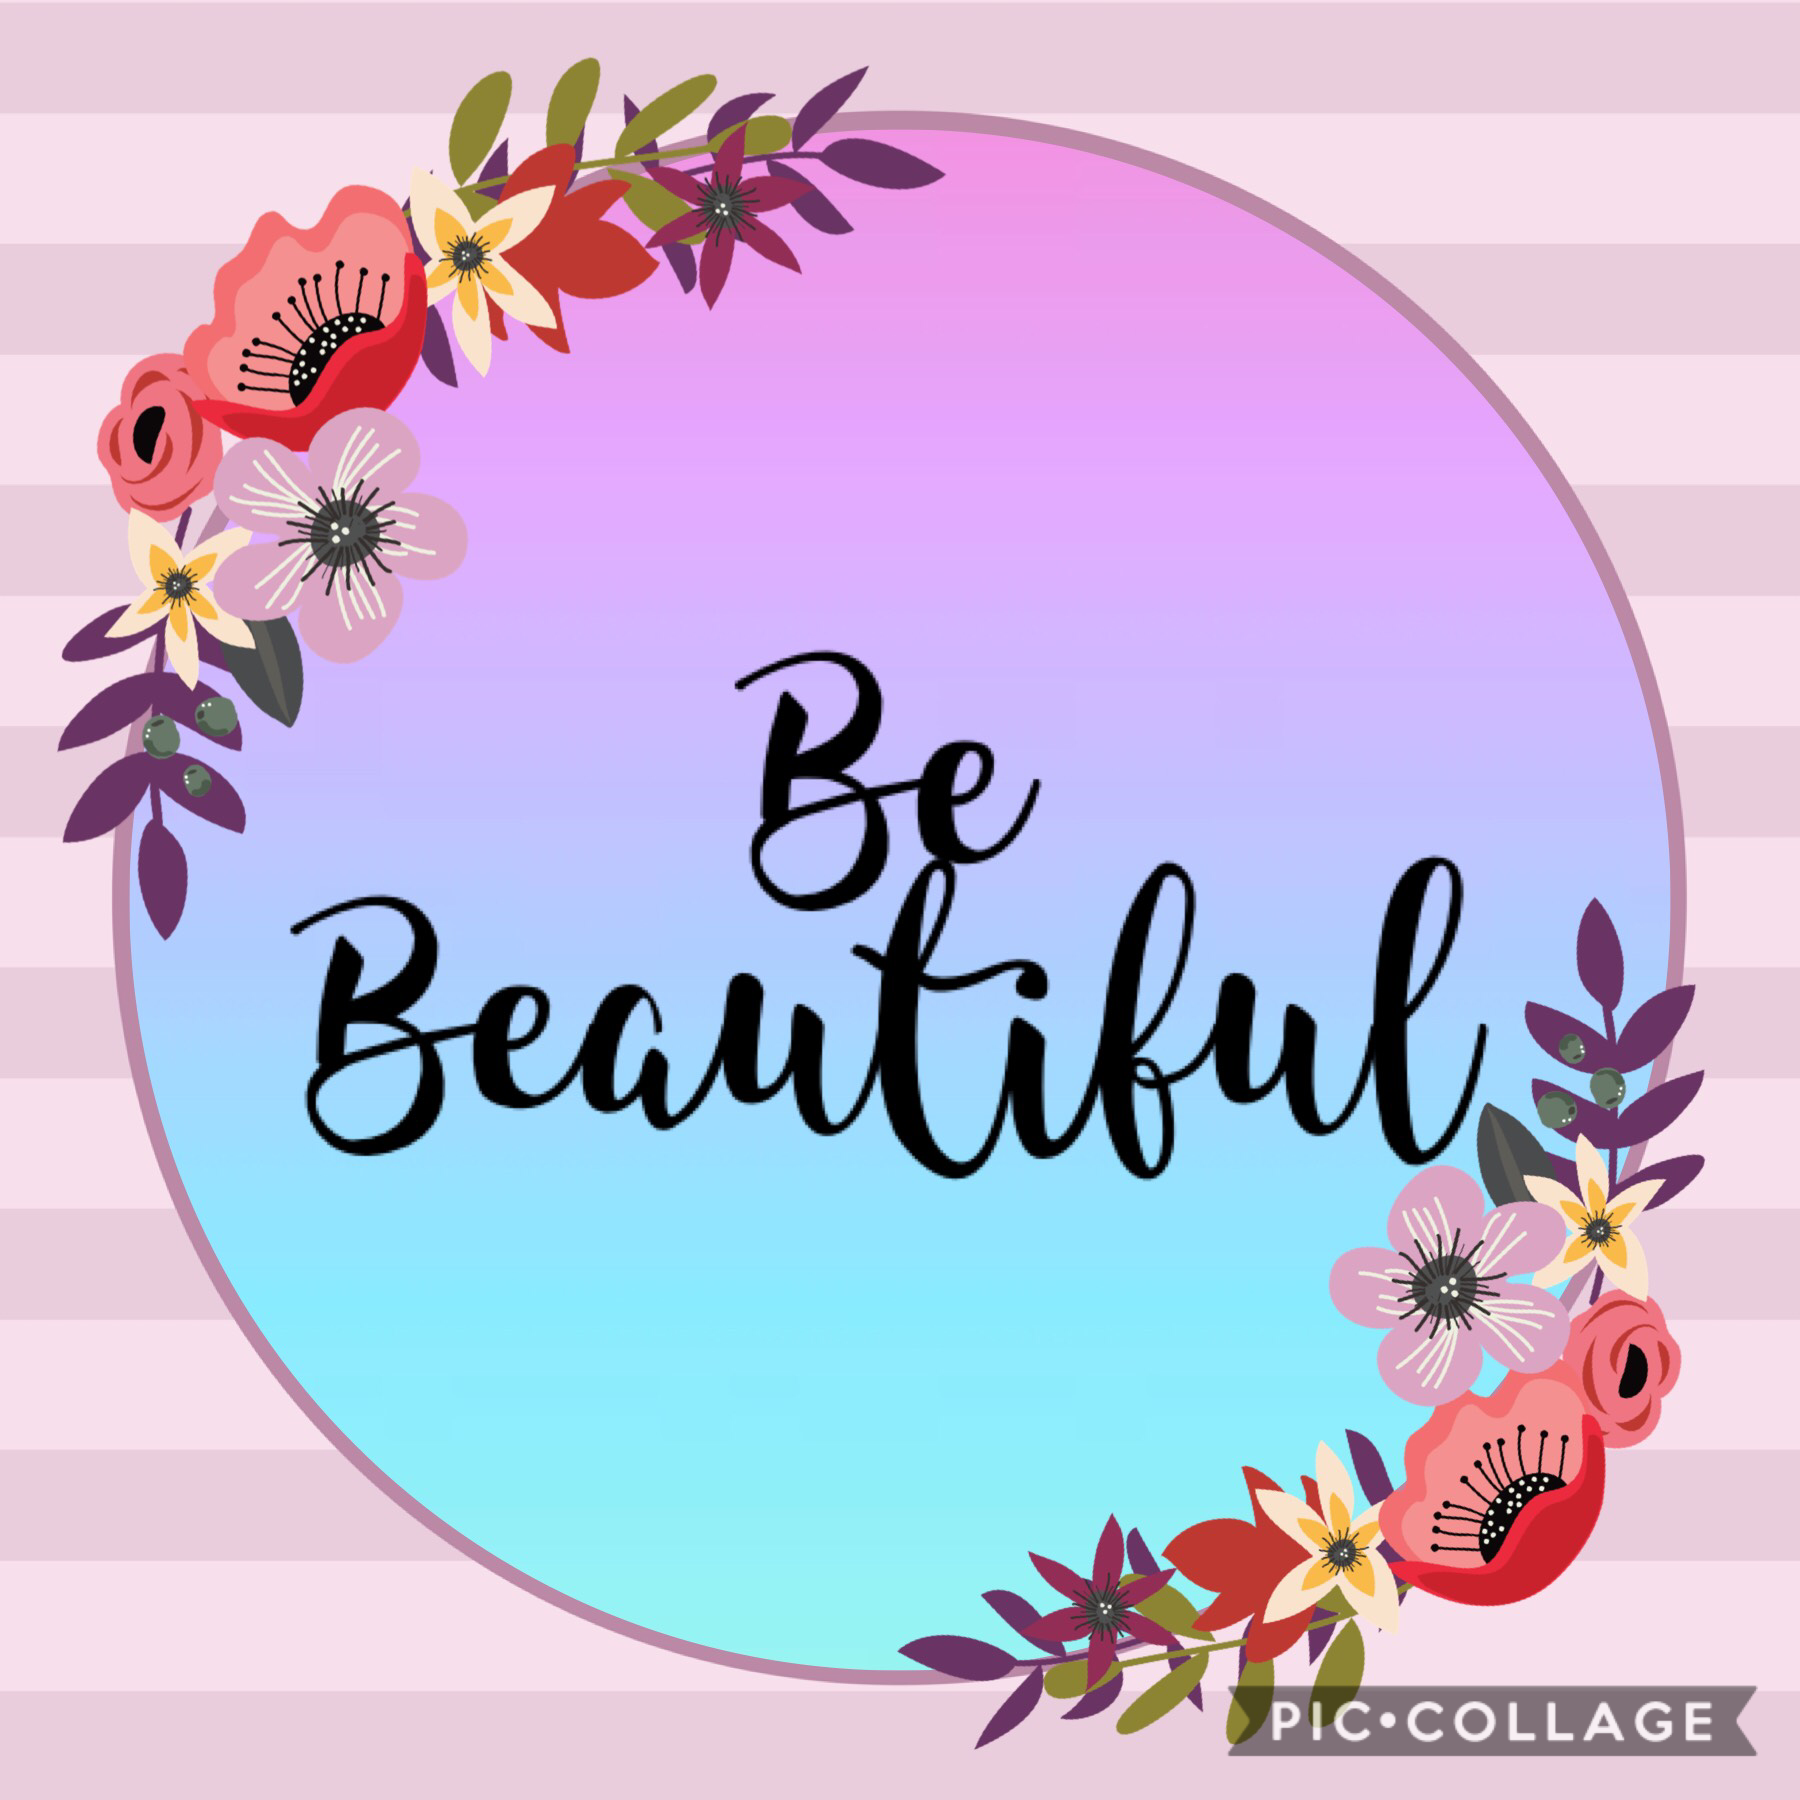 Keep being beautiful 